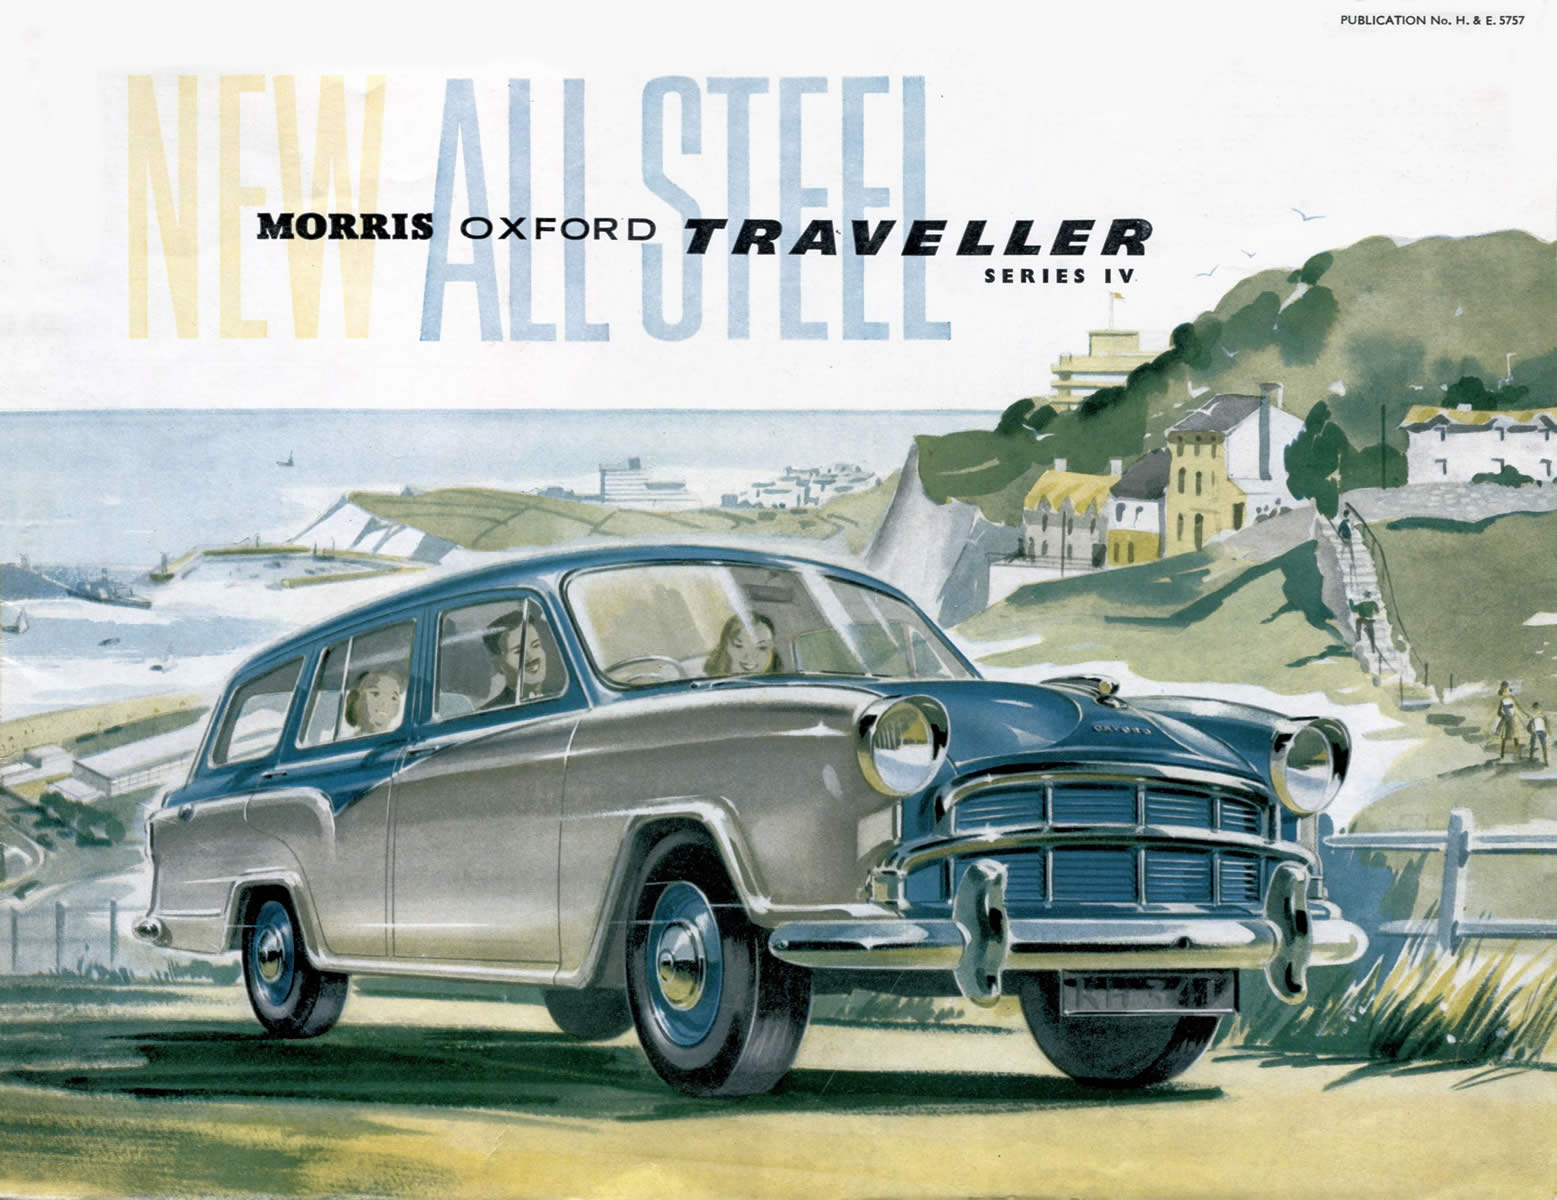 Morris Oxford Traveller series IV brochure cover 1957